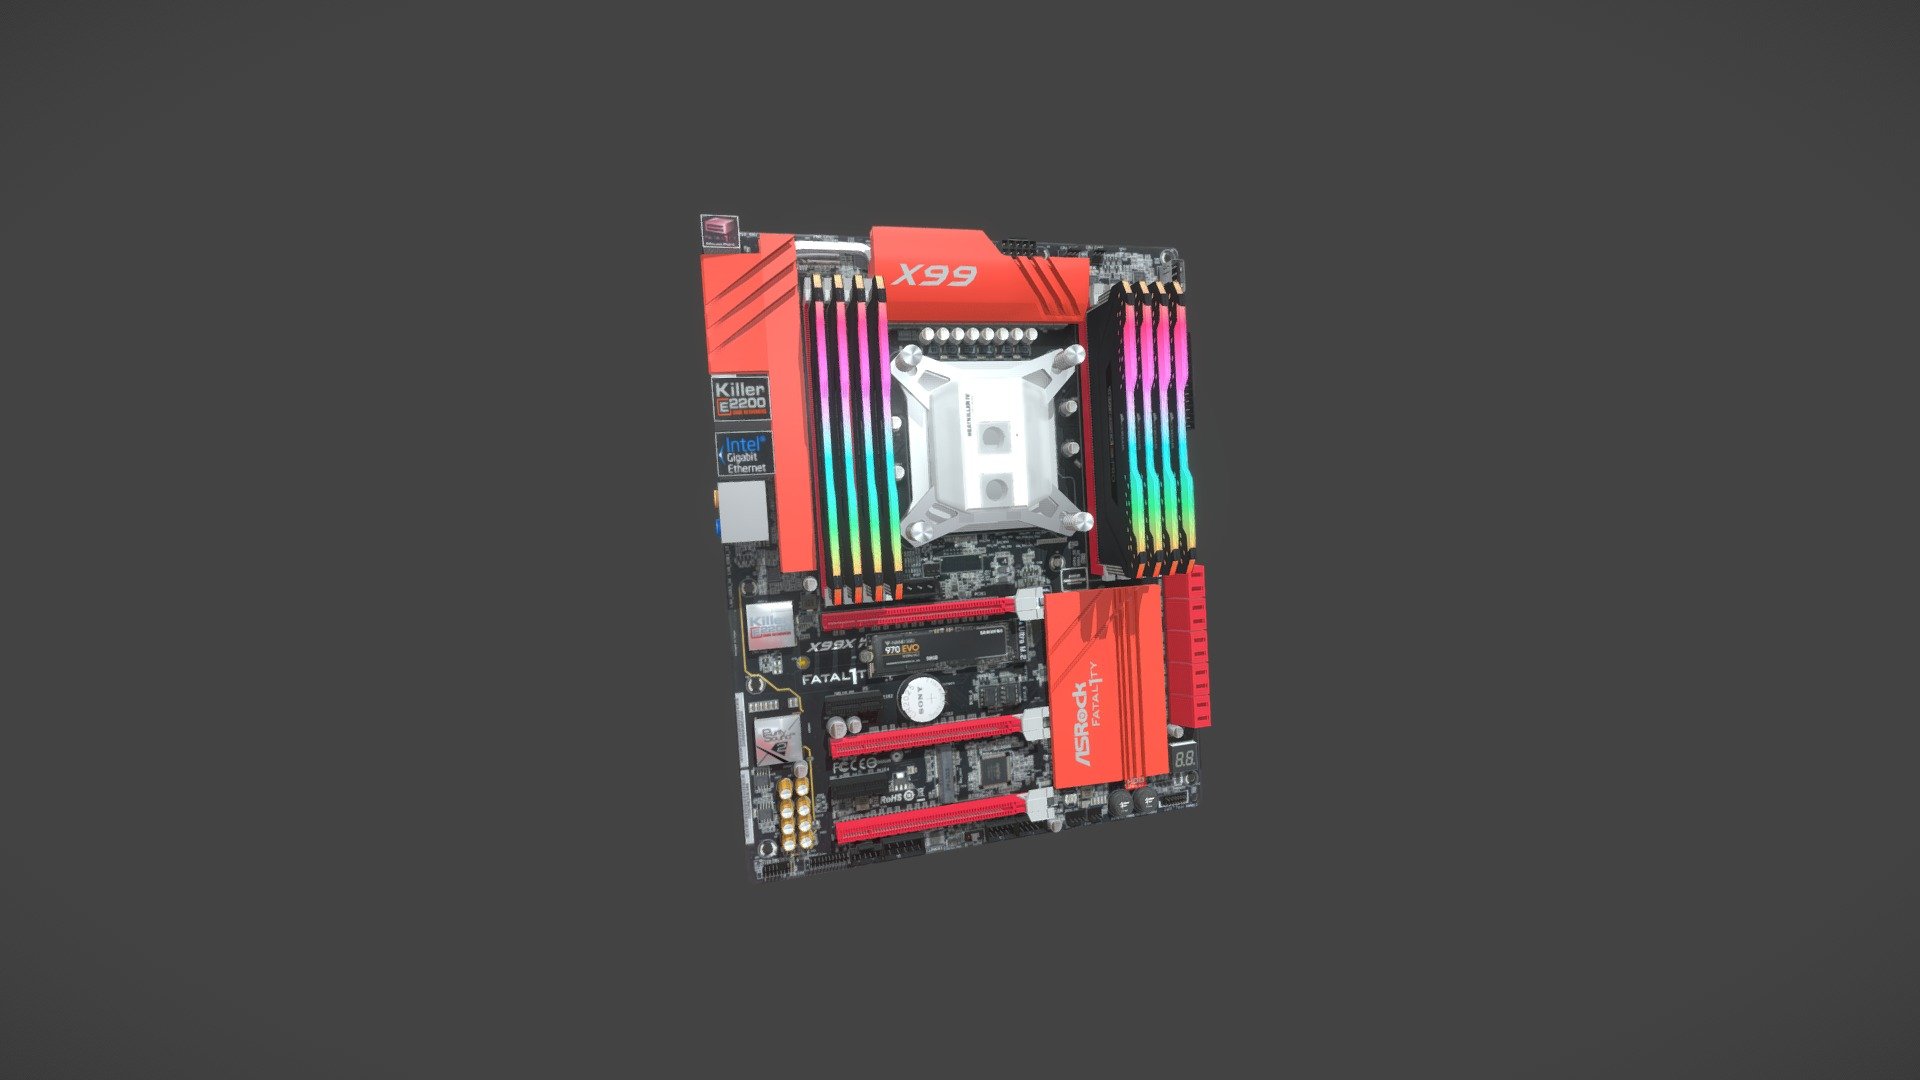 Motherboard ASRock Fatal1ty X99 + CPU Block: Heatkiller IV + Memory corsair vengeance rgb pro black + Ssd Samsung MZ-V7S250BW - Asus motherboard - 3D model by CG max (@cgmax) 3d model